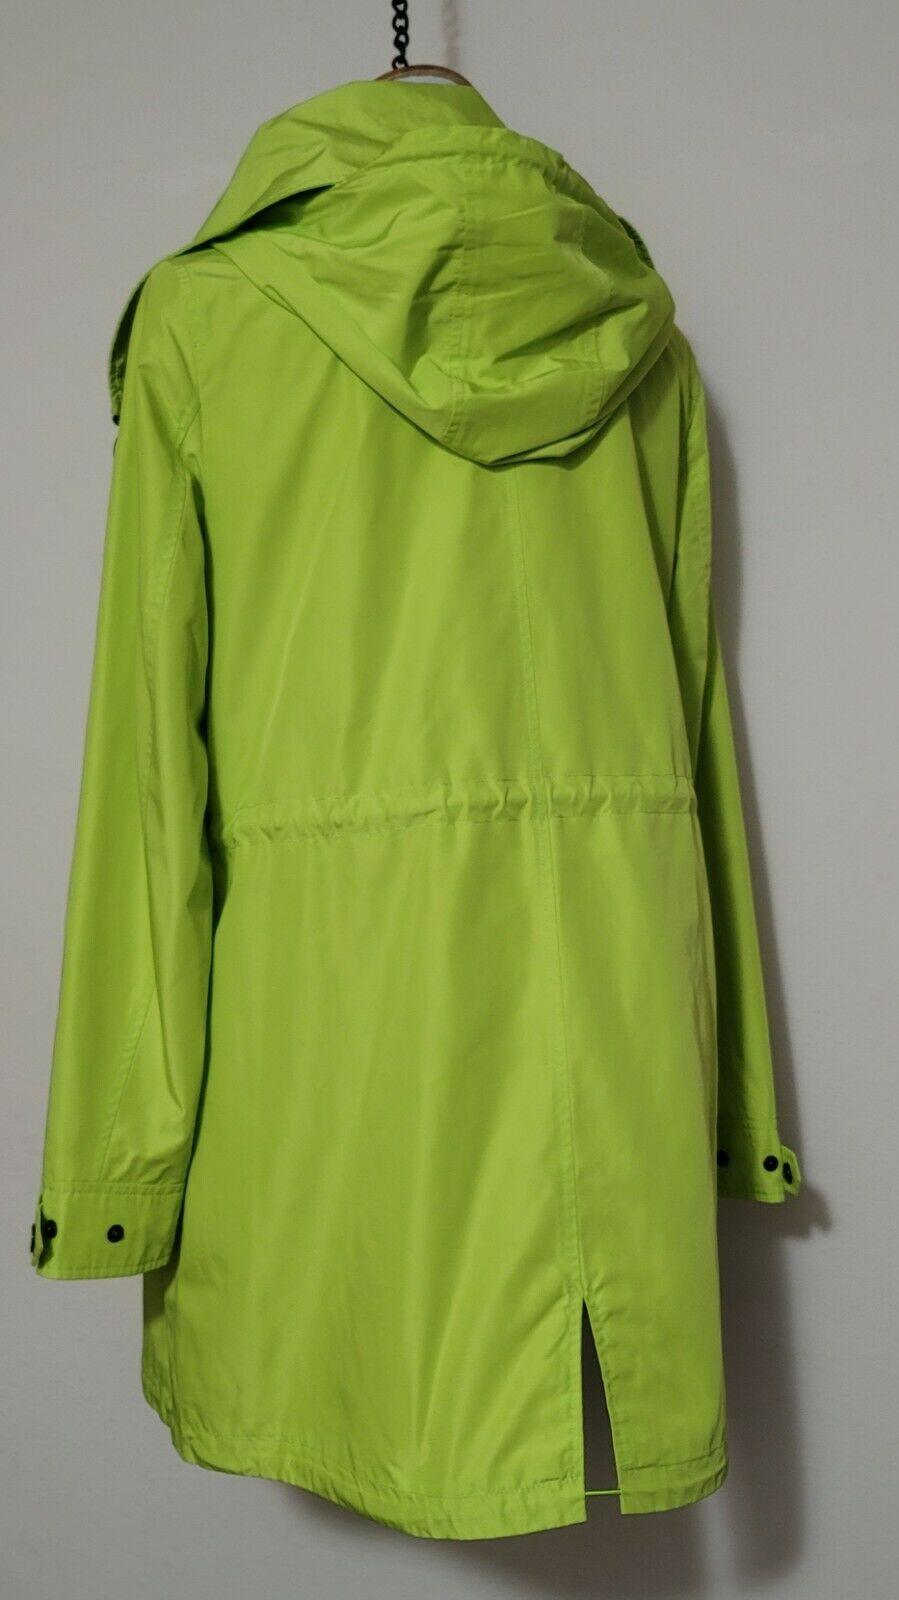 Michael Kors Hooded Windbreaker Water Resistant Neon Green Jacket Size M - SVNYFancy